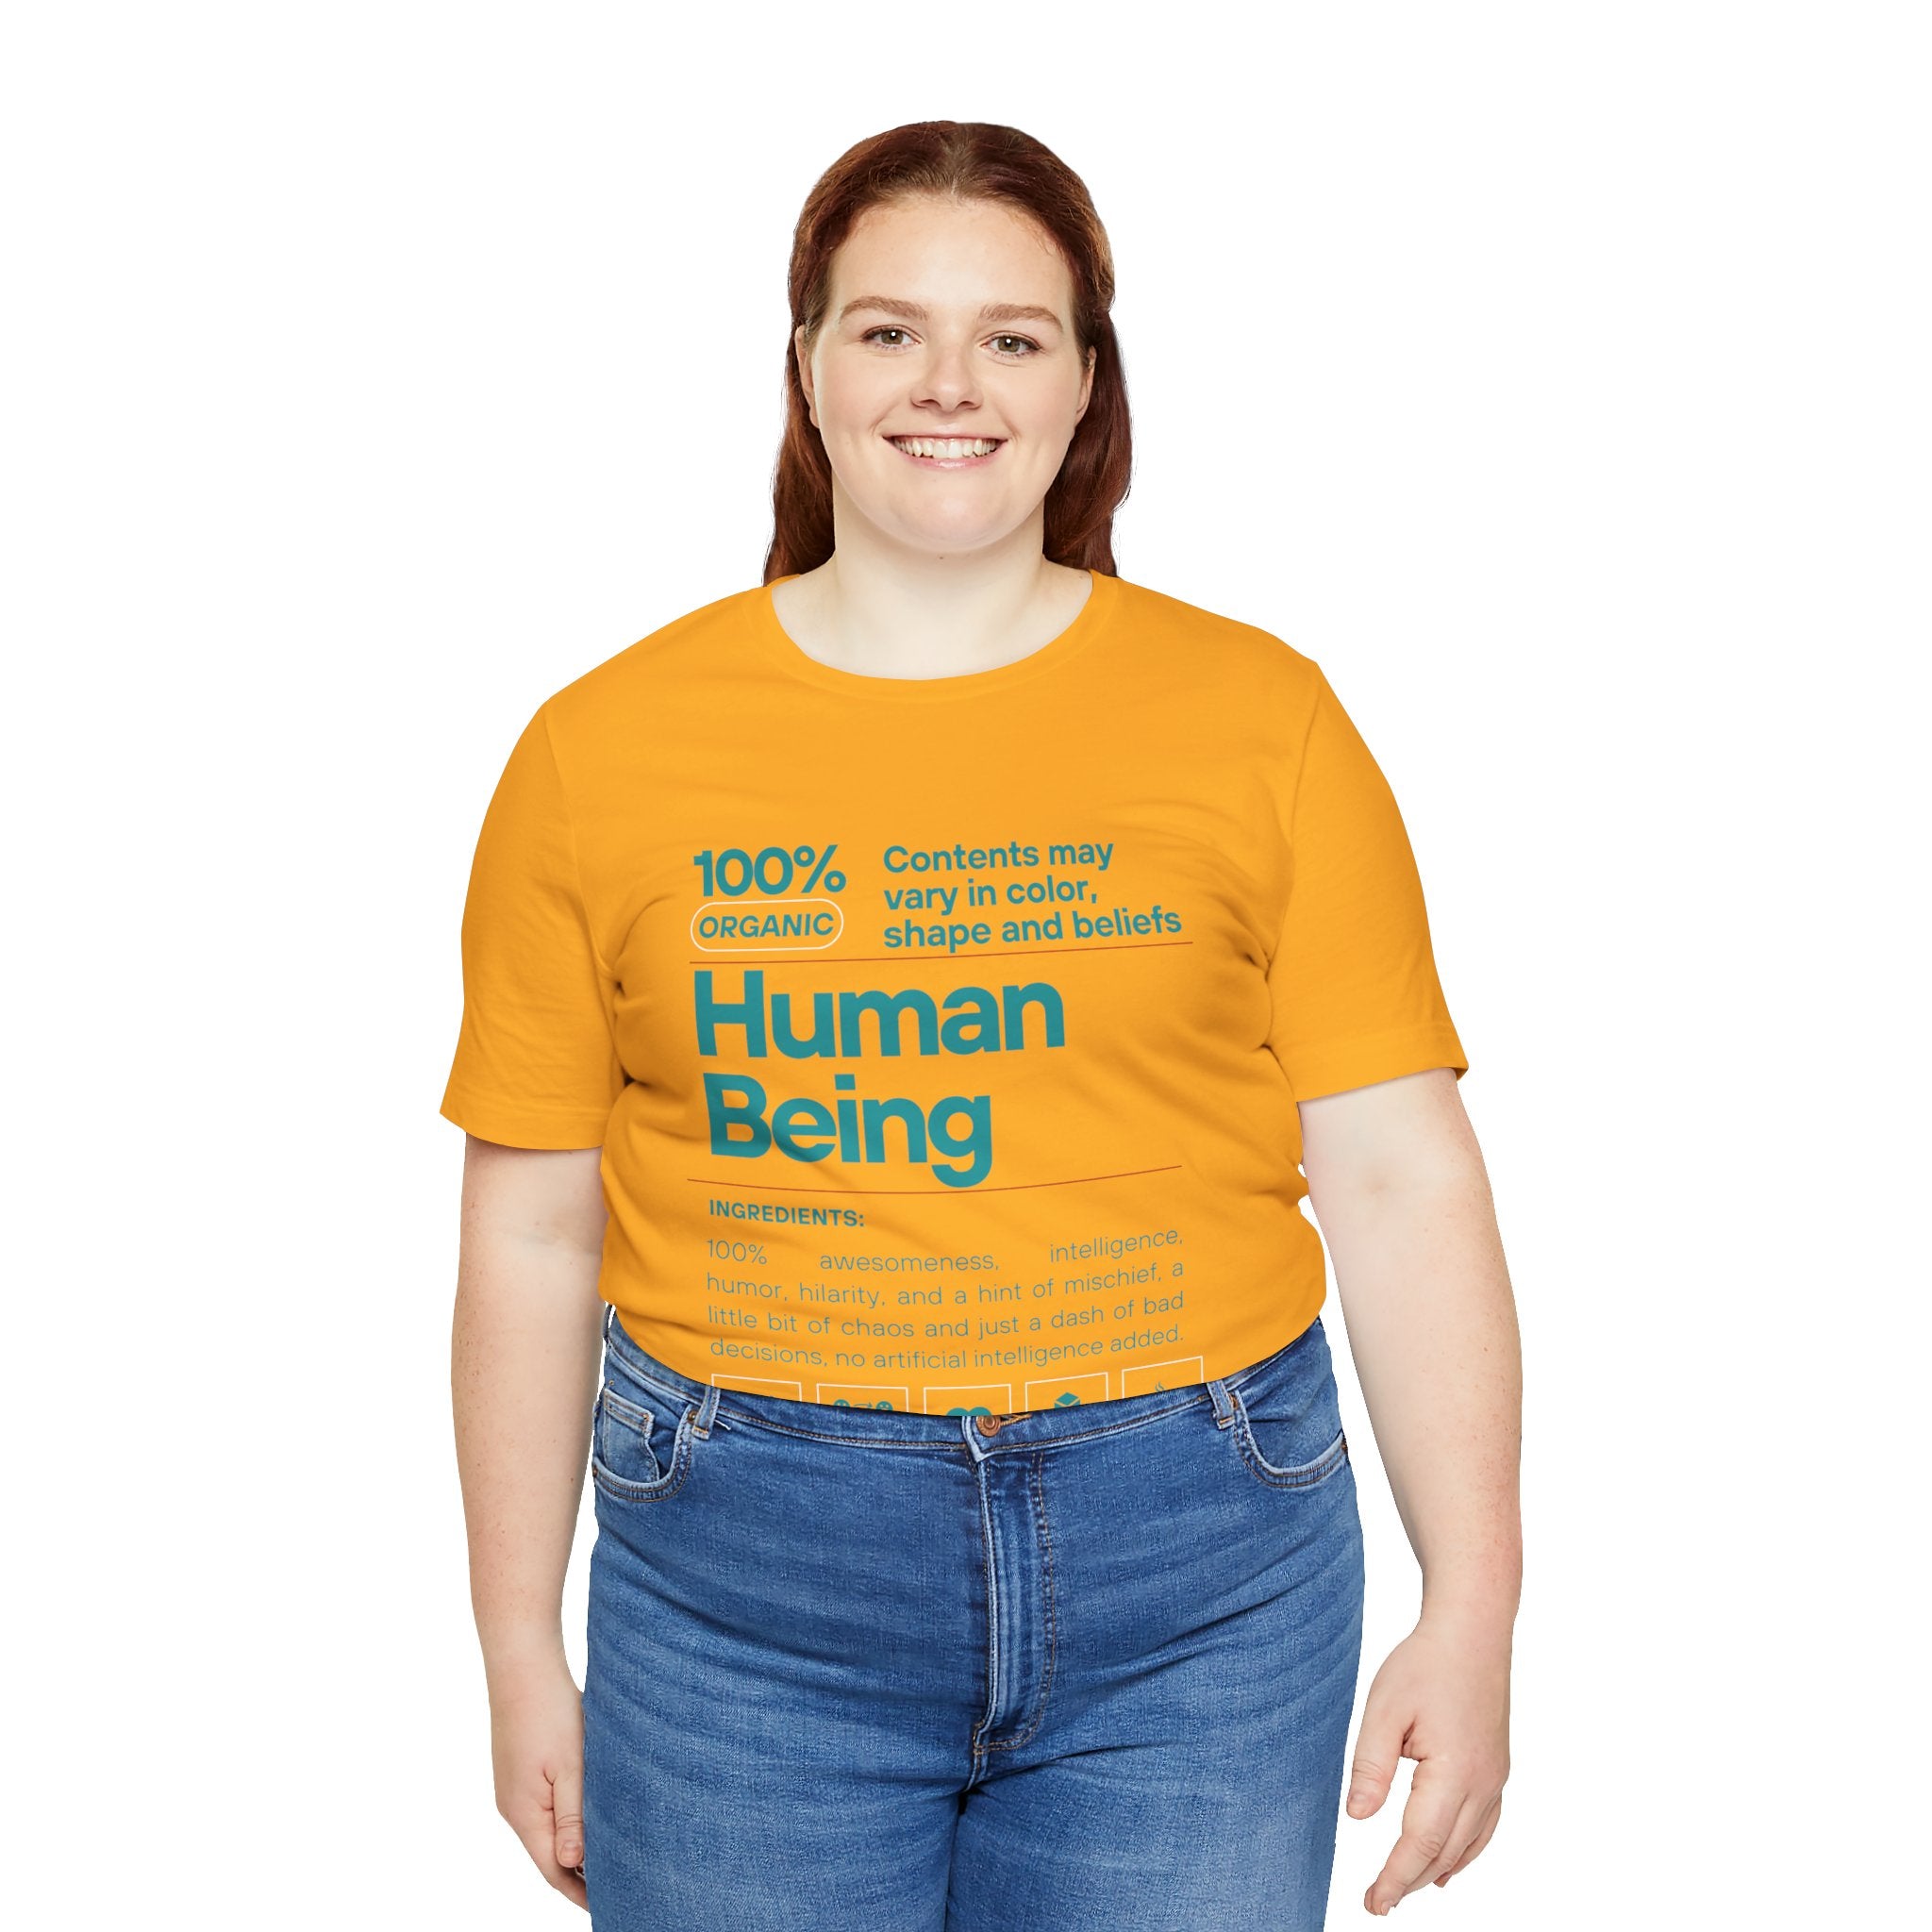 Being Human Tee Shirt